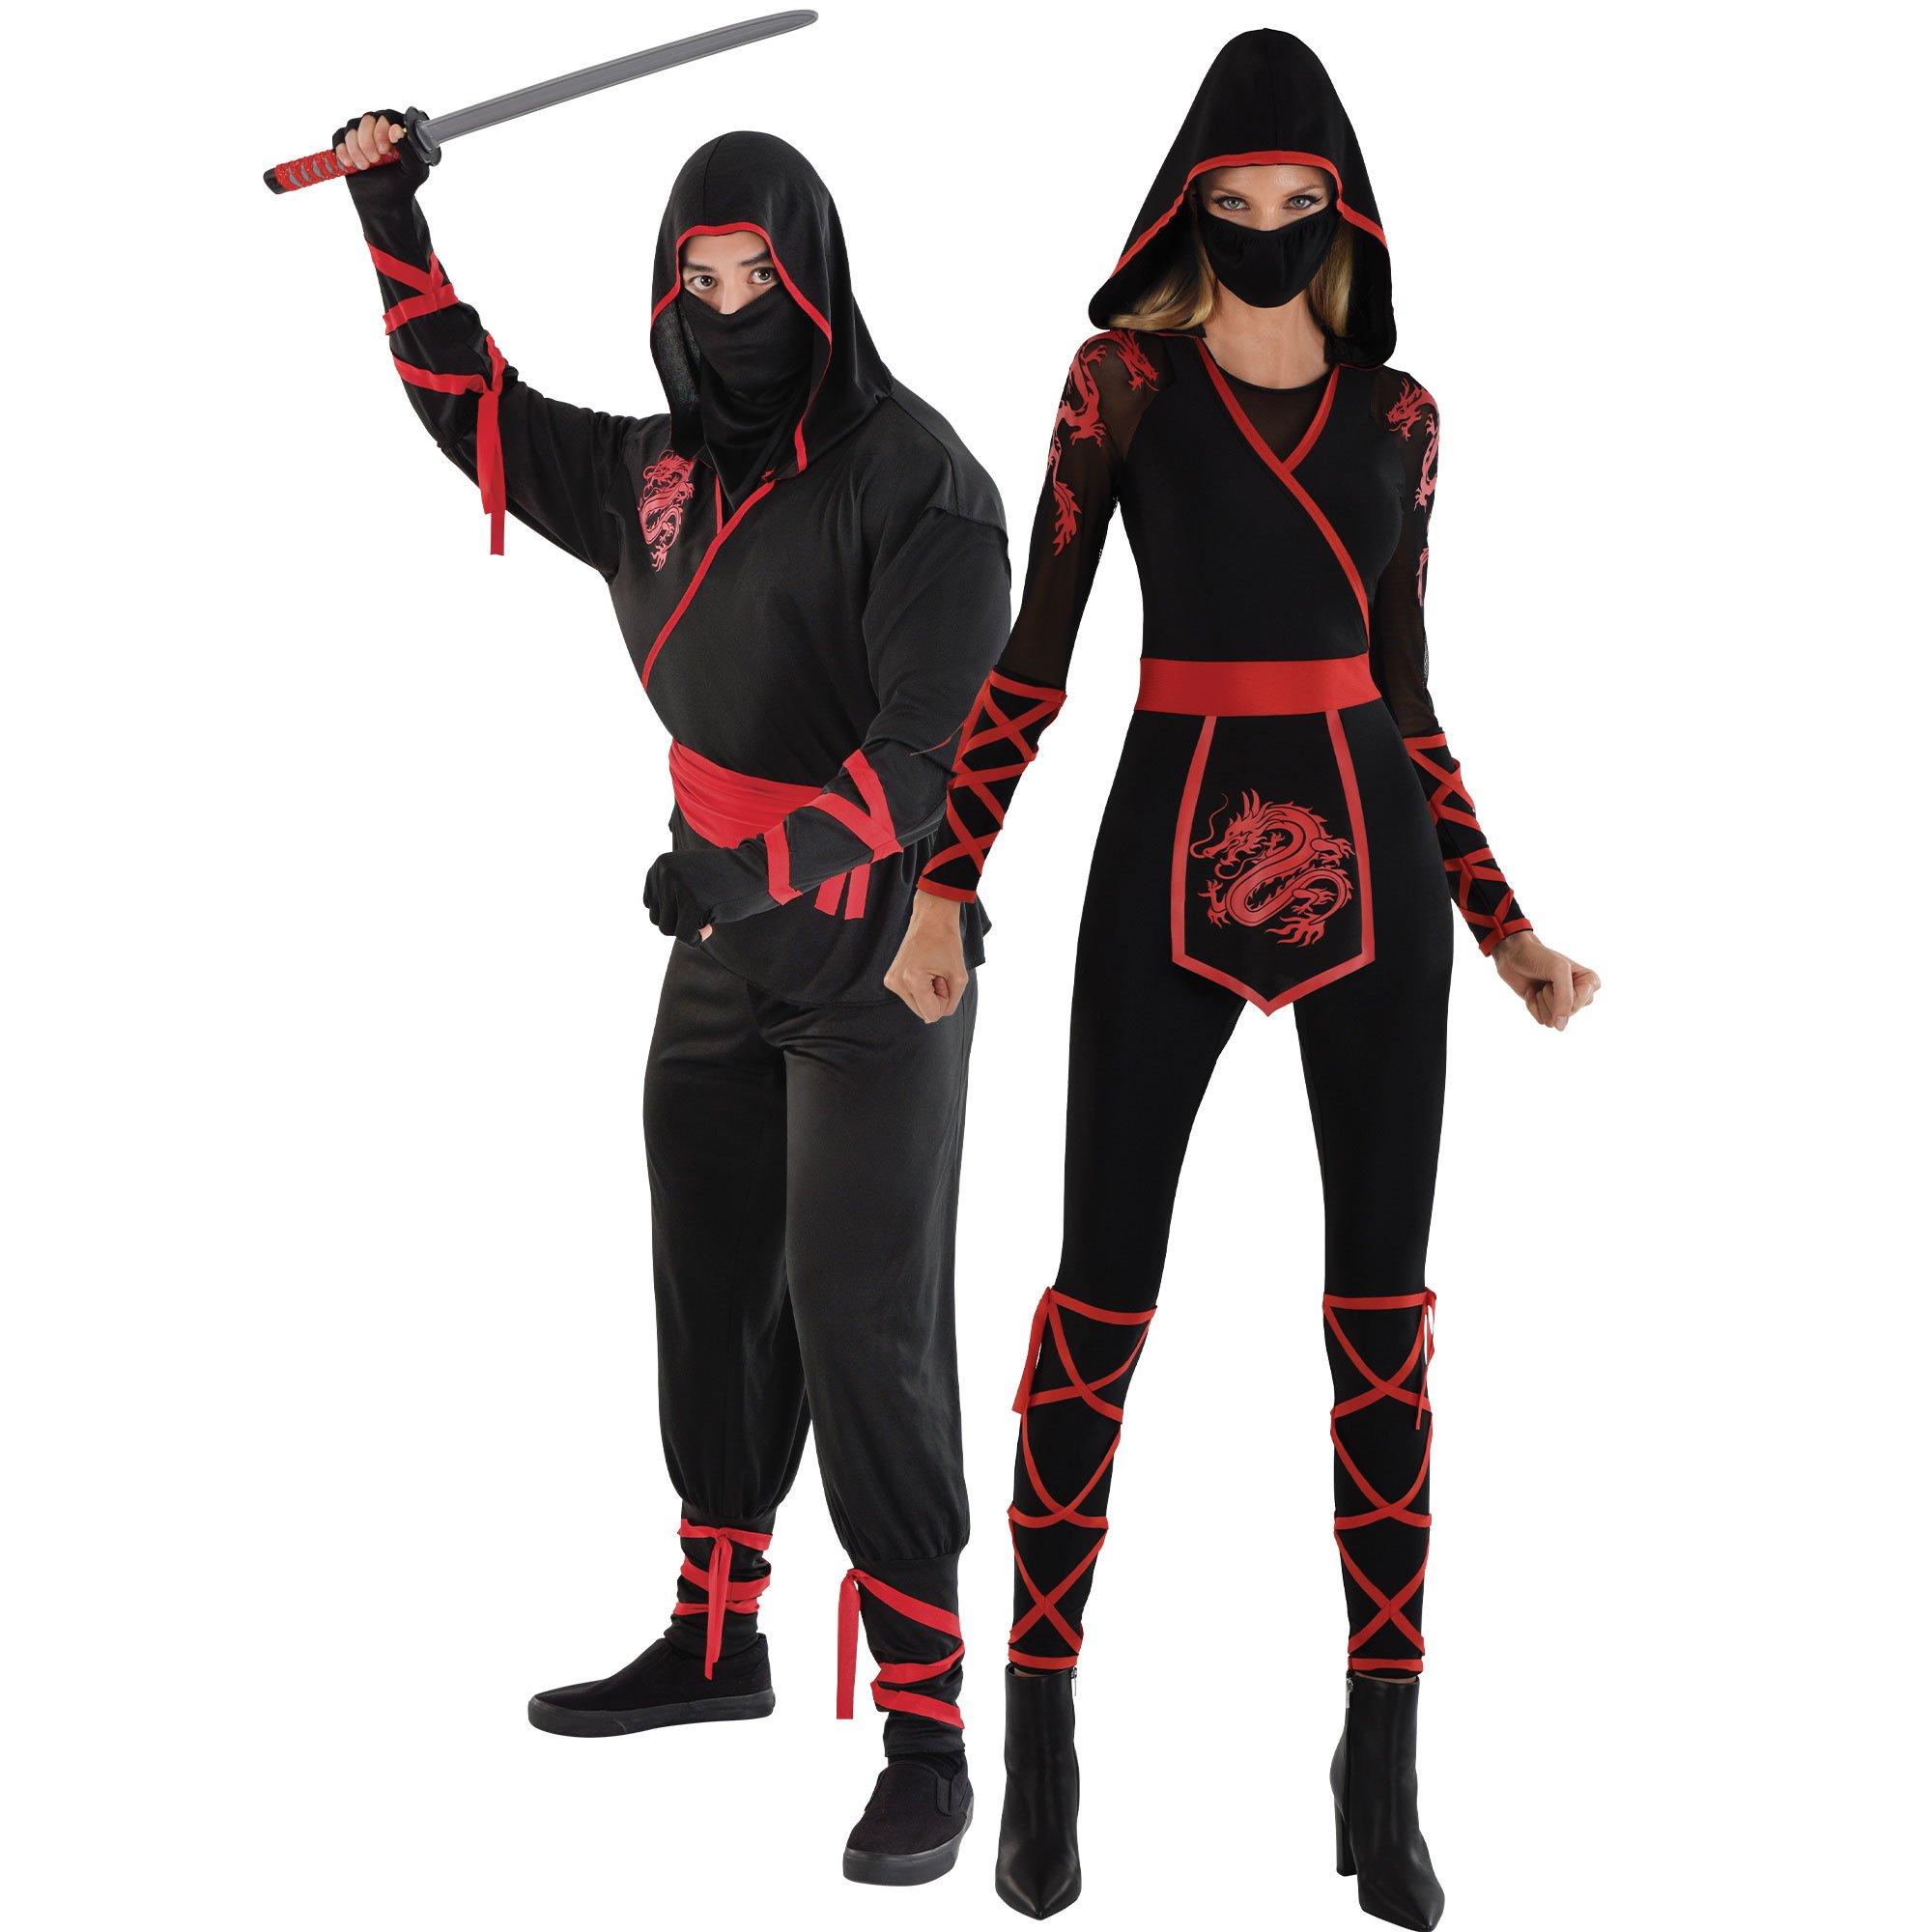 Ninja costume women • Compare & find best price now »